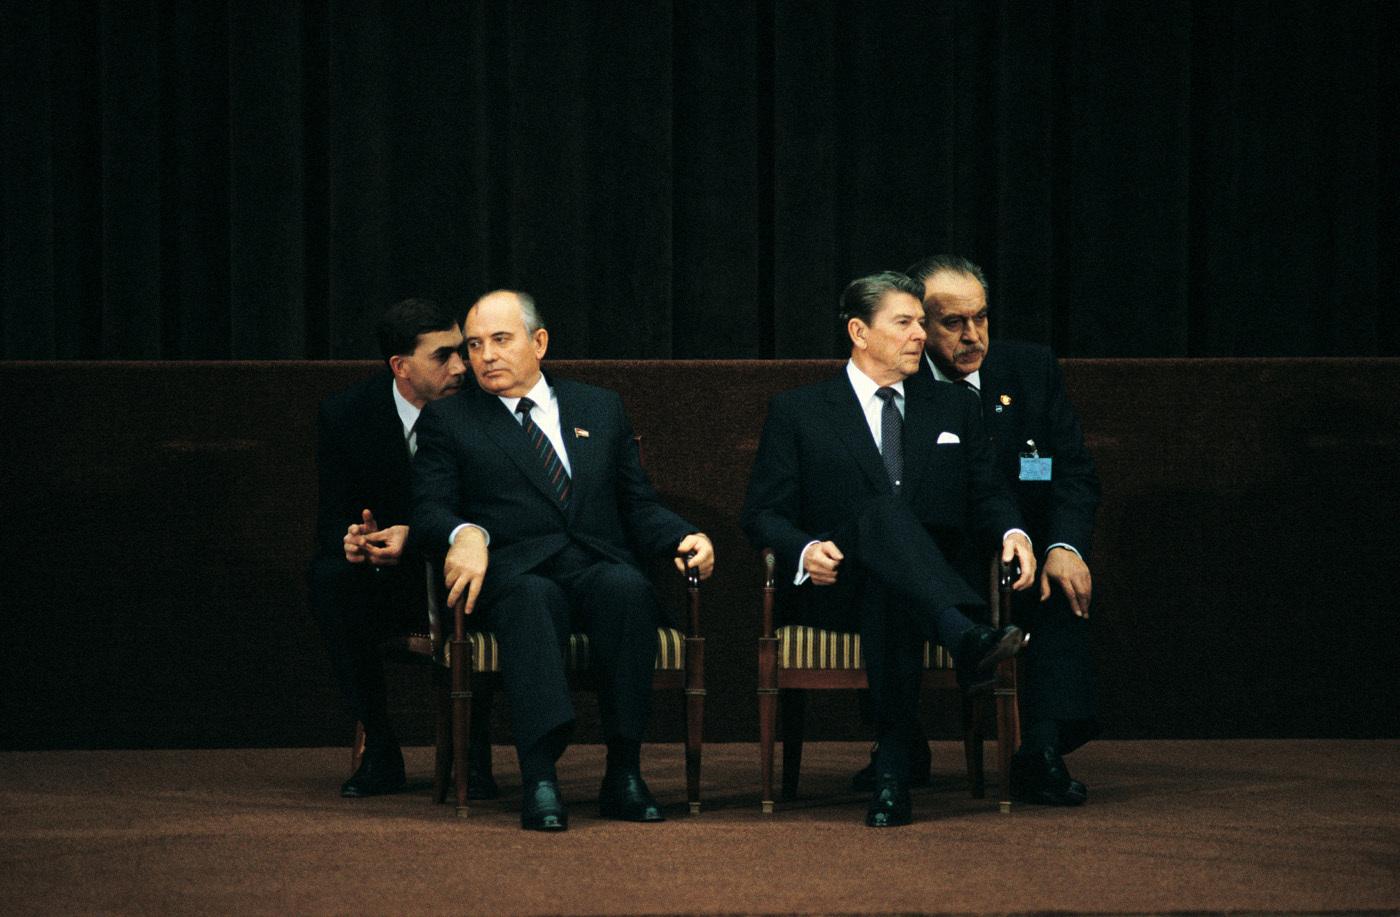 The First Summit-Geneva: Gorbachev & Reagan : Classics, Old & New : David Burnett | Photographer